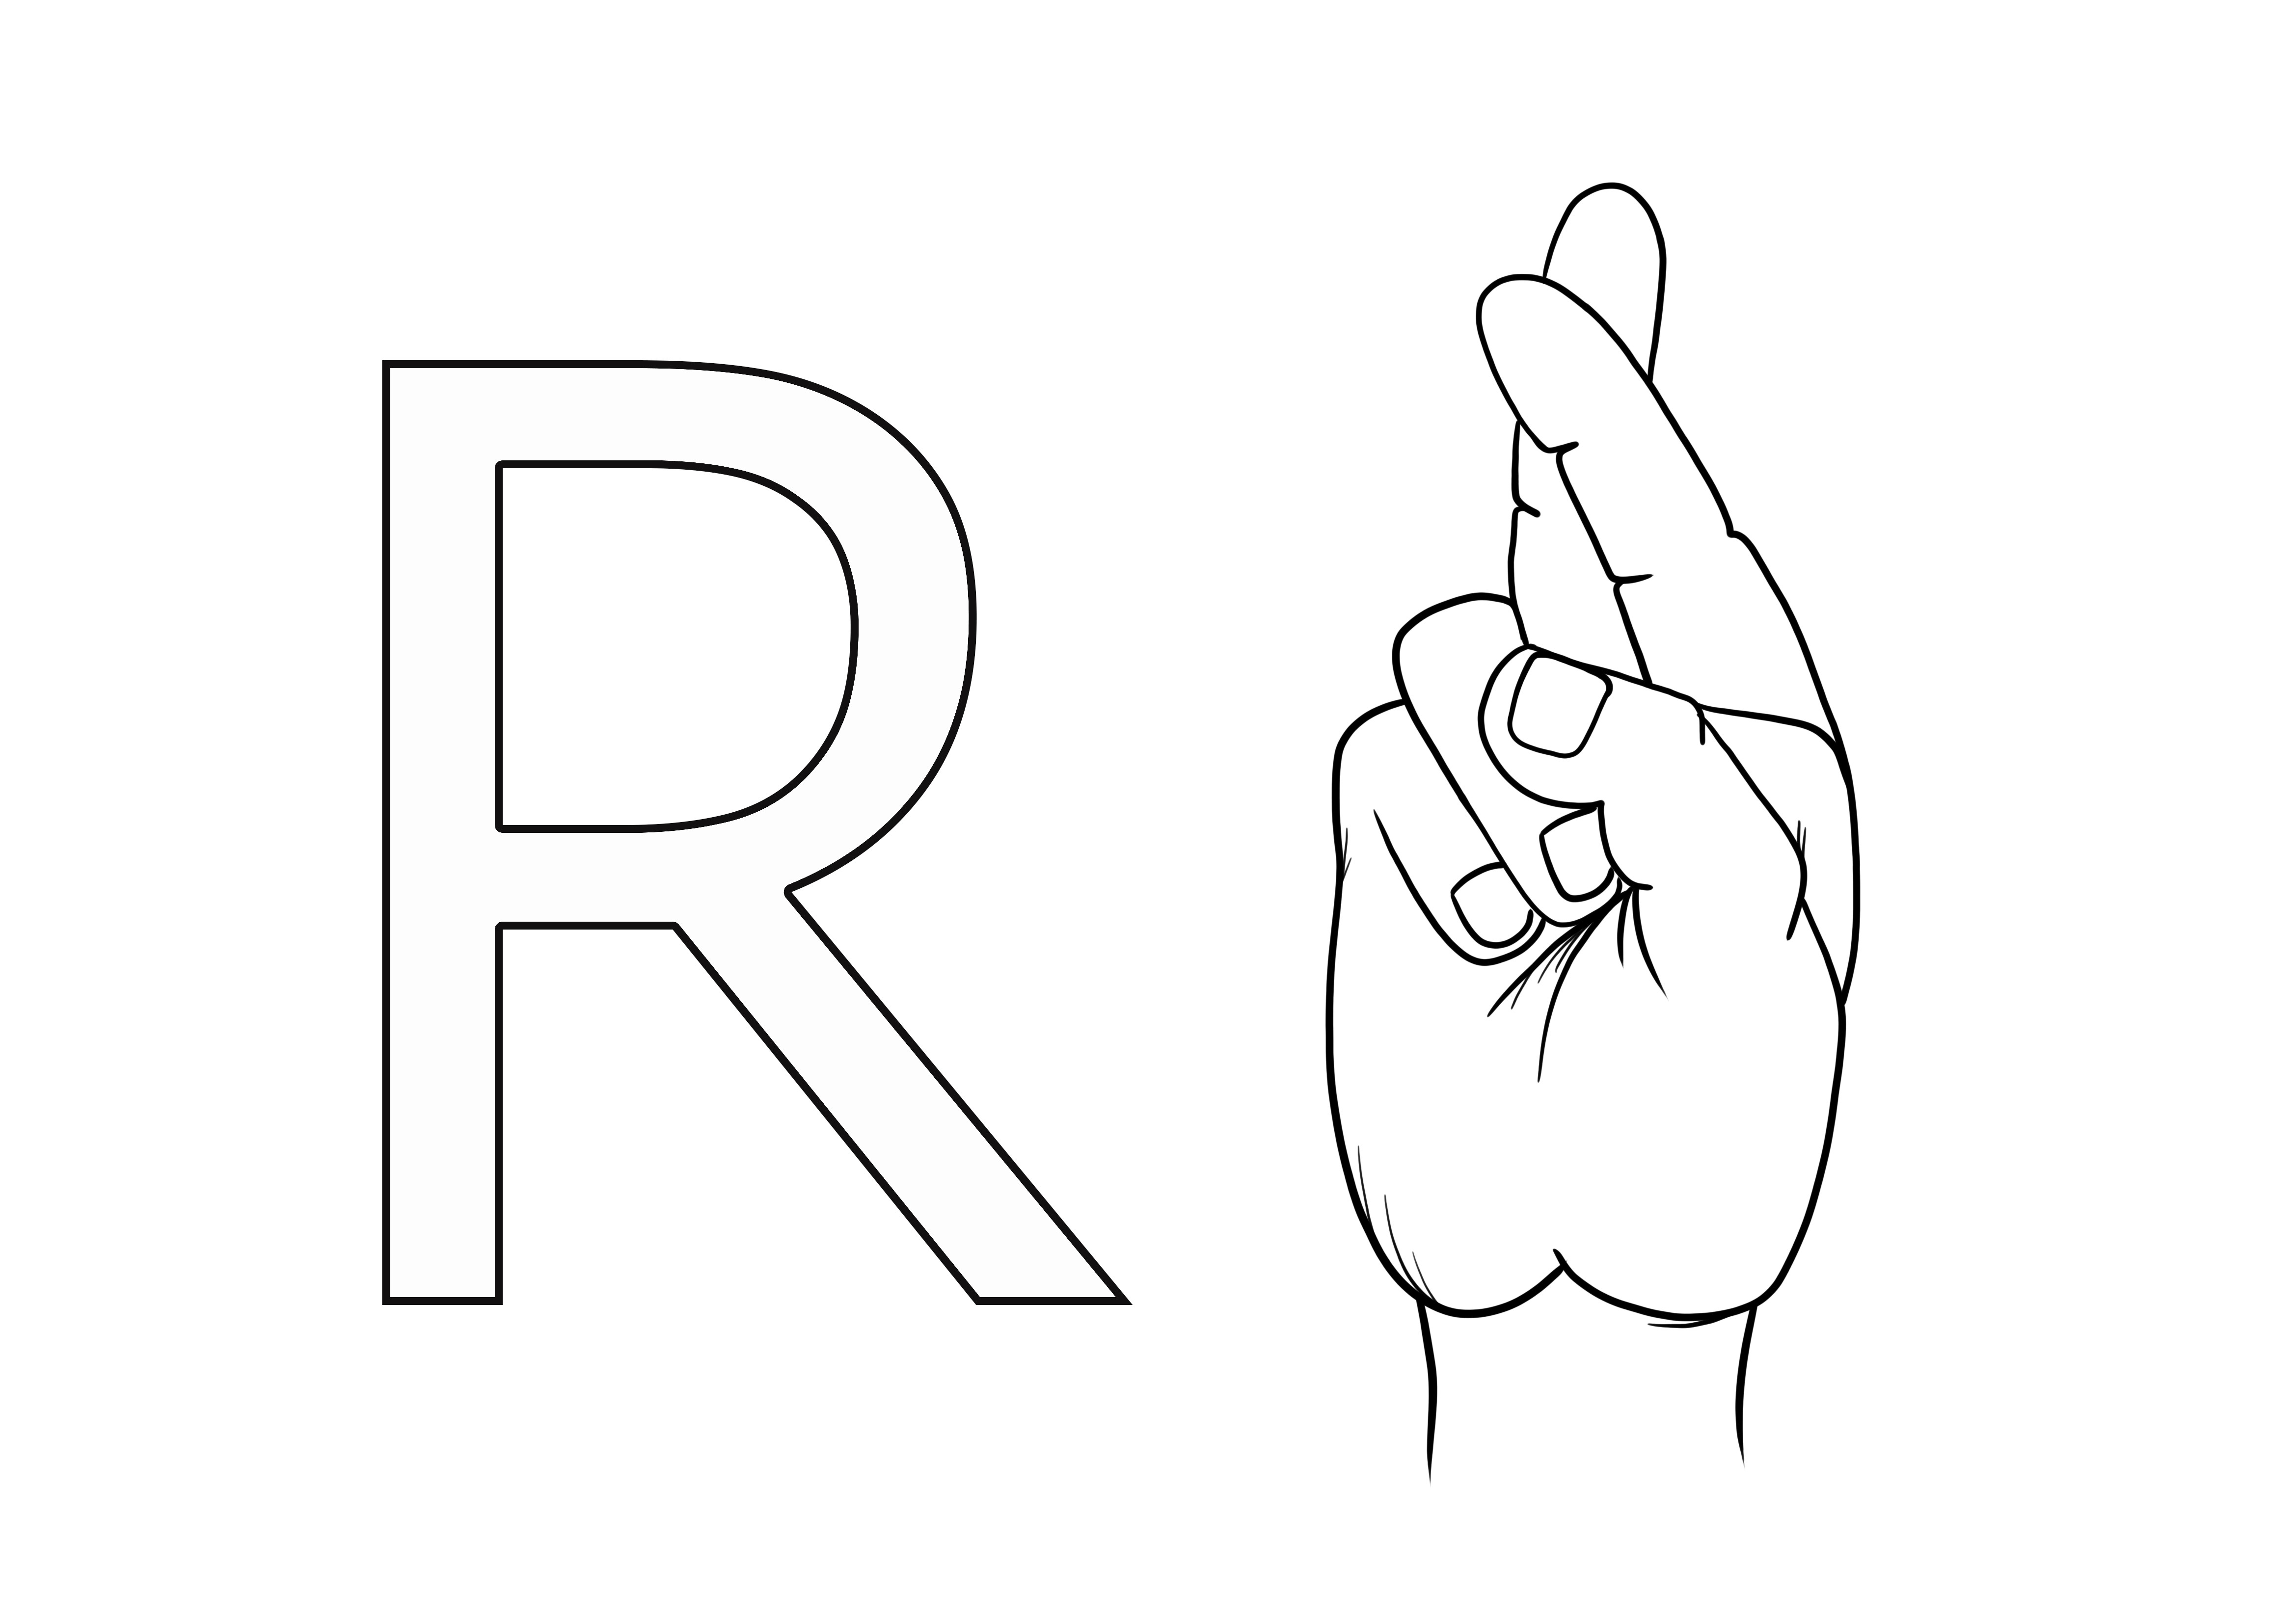 ASL 文字 R の無料印刷とぬりえ画像